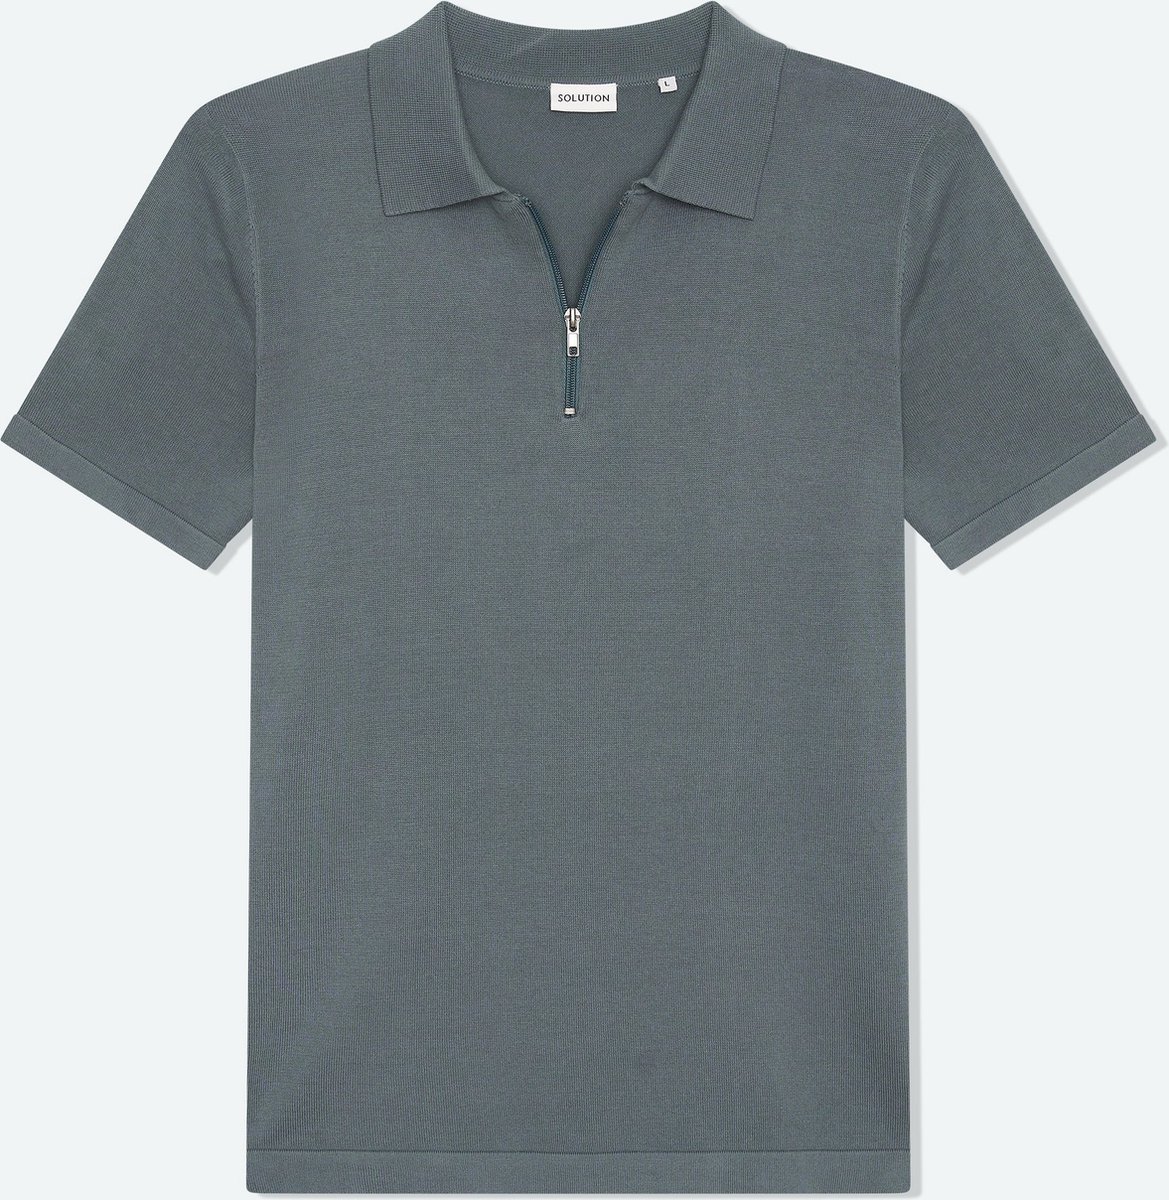 Solution Clothing Zipper - Casual Poloshirt - Regular Fit - Knoopsluiting - Volwassenen - Heren - Mannen - Blauw - M - M - Solution Clothing